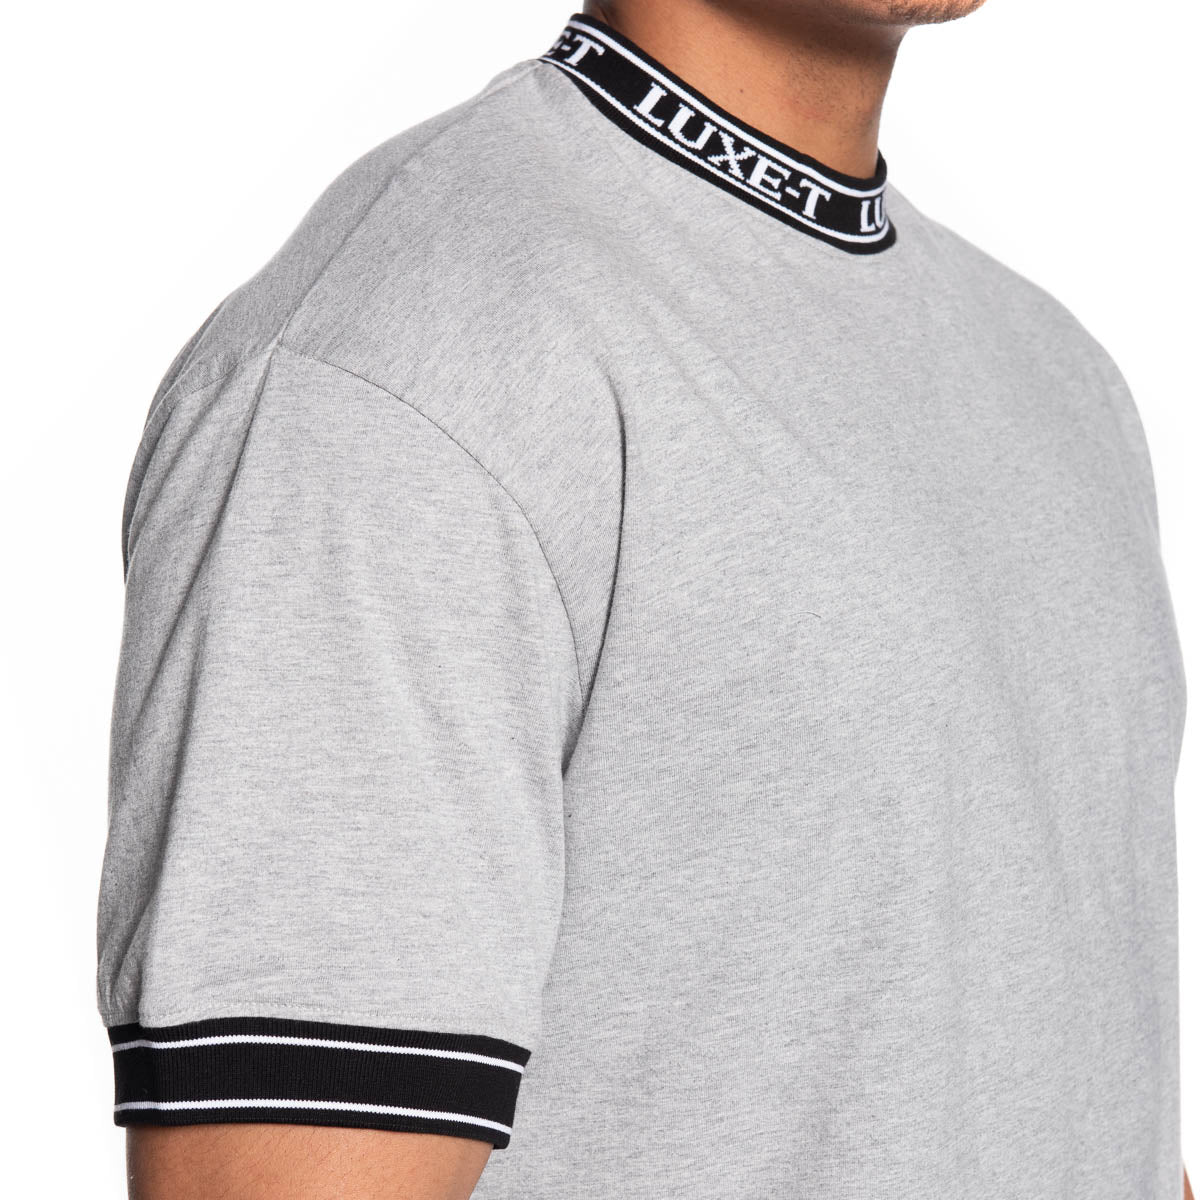 Logo Collar with Striped Cuff T-shirt